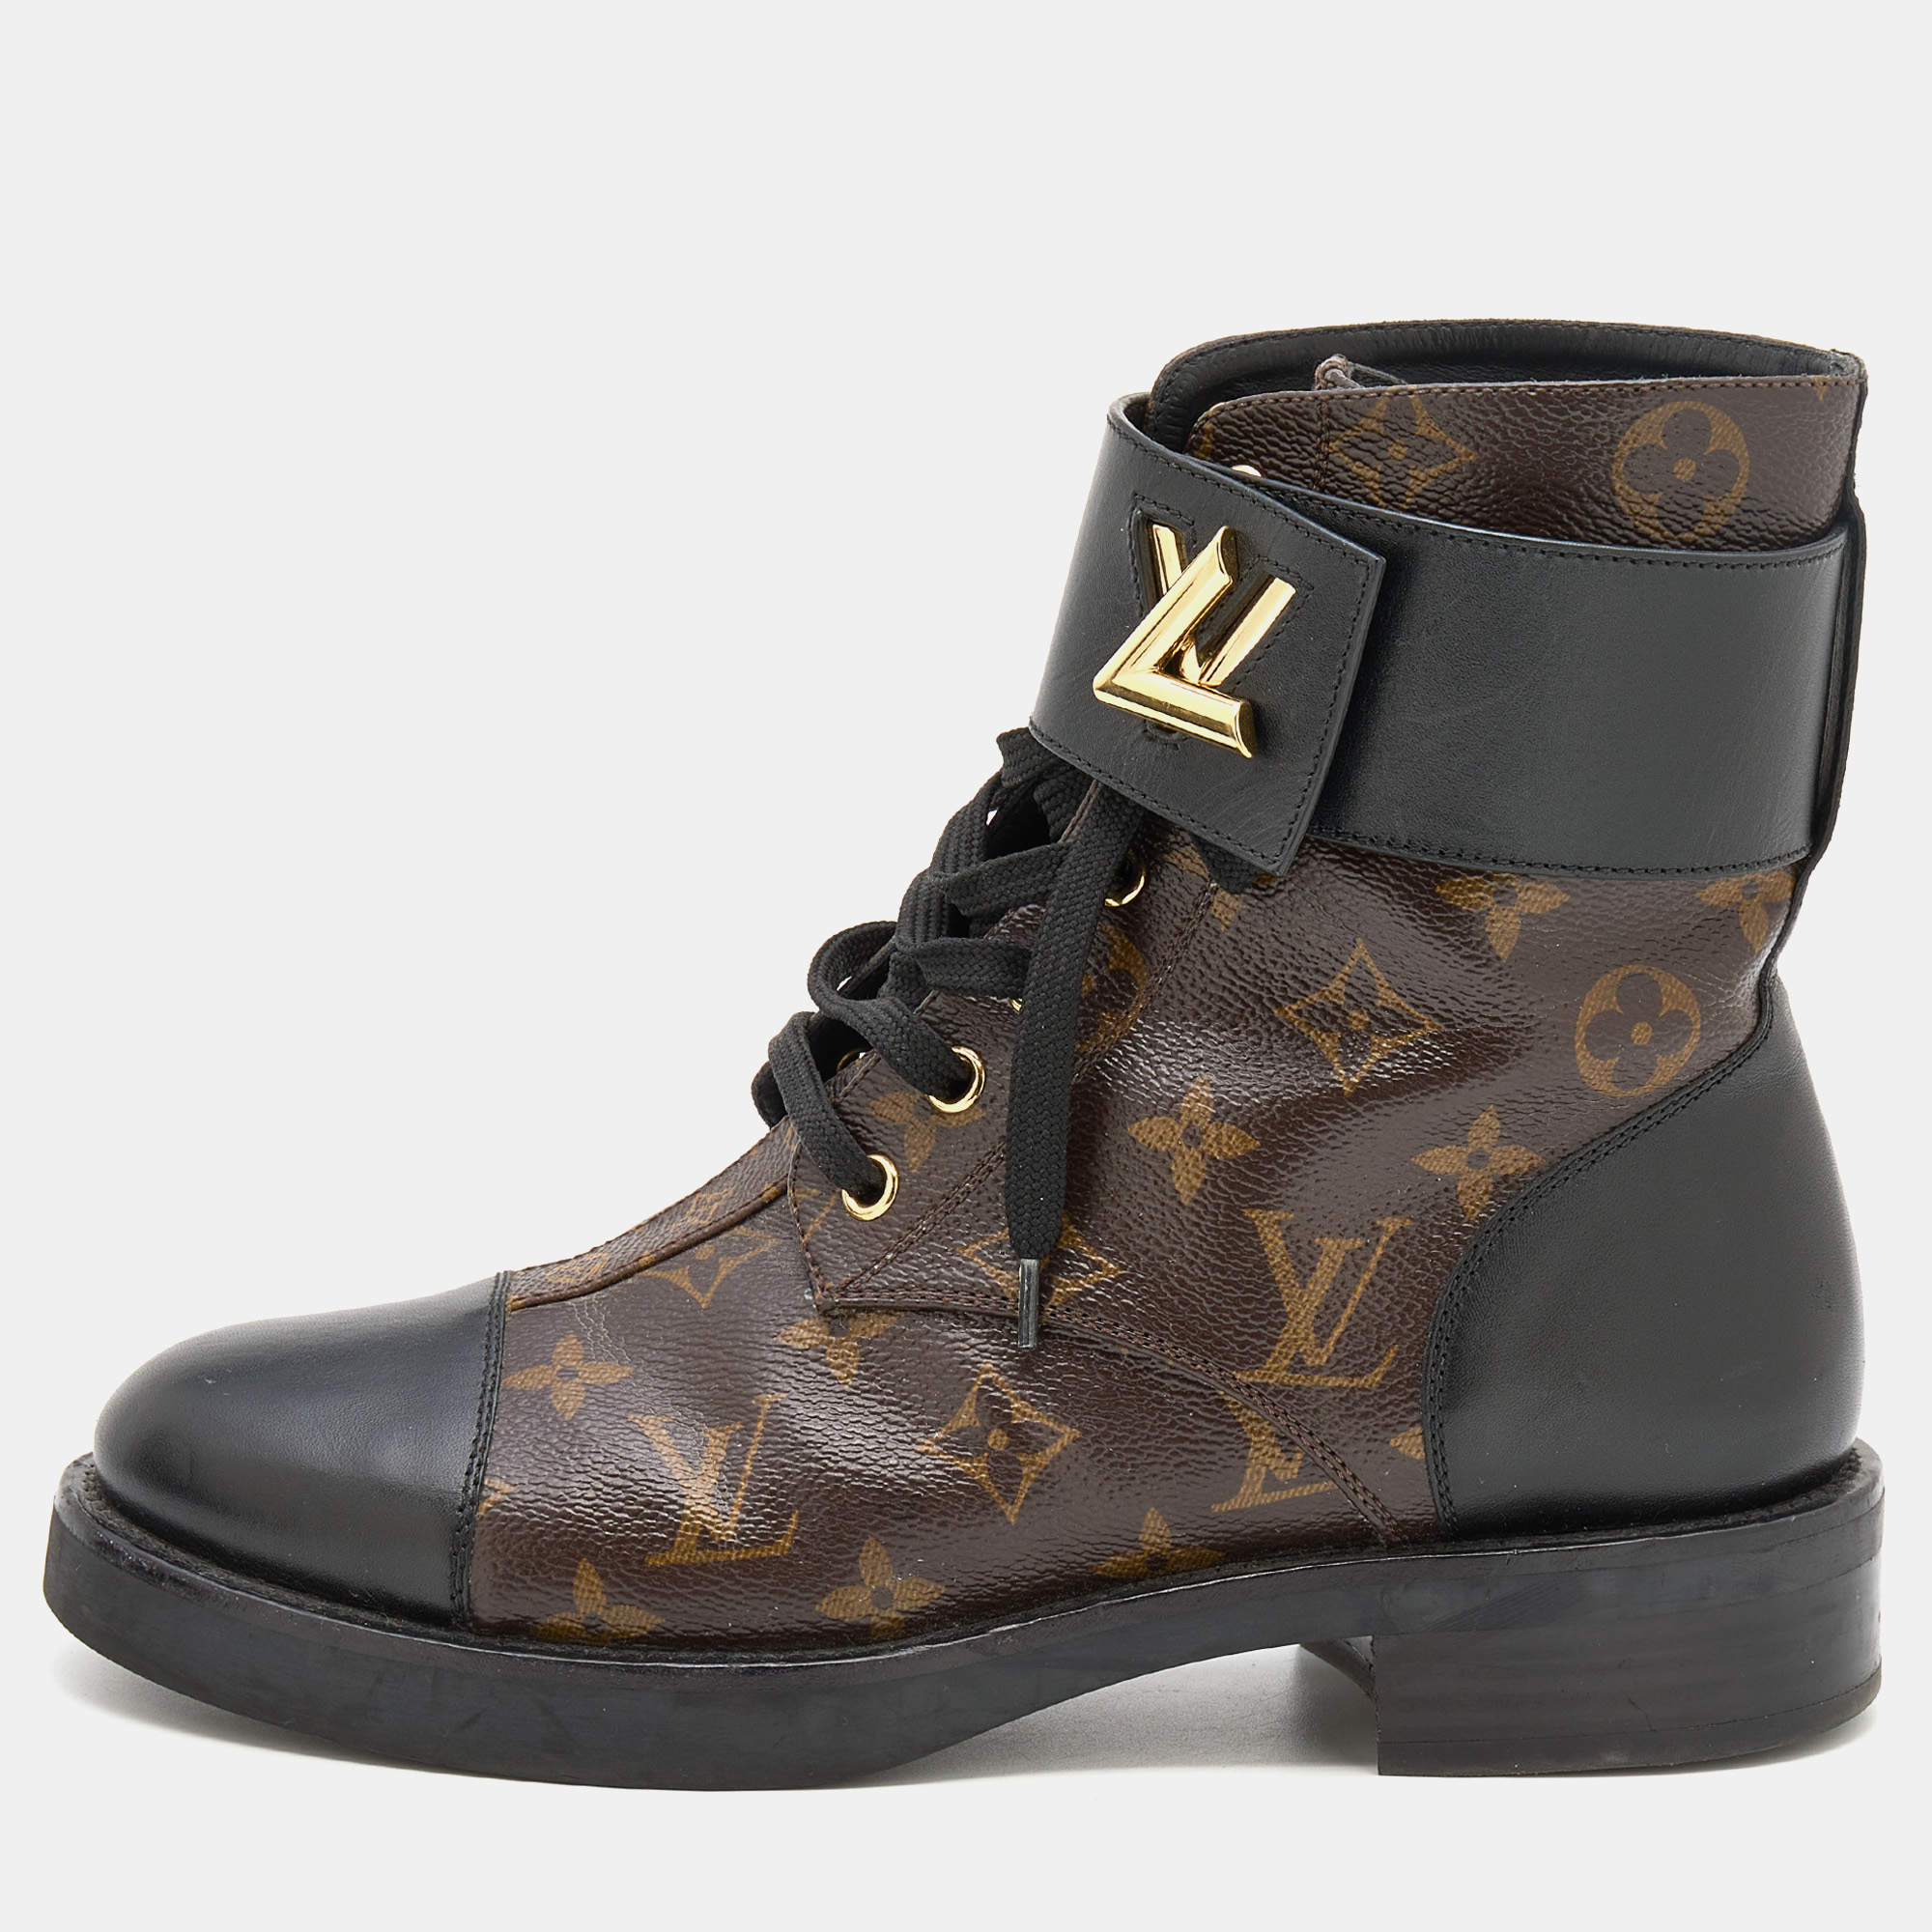 Wonderland leather biker boots Louis Vuitton Khaki size 38.5 EU in